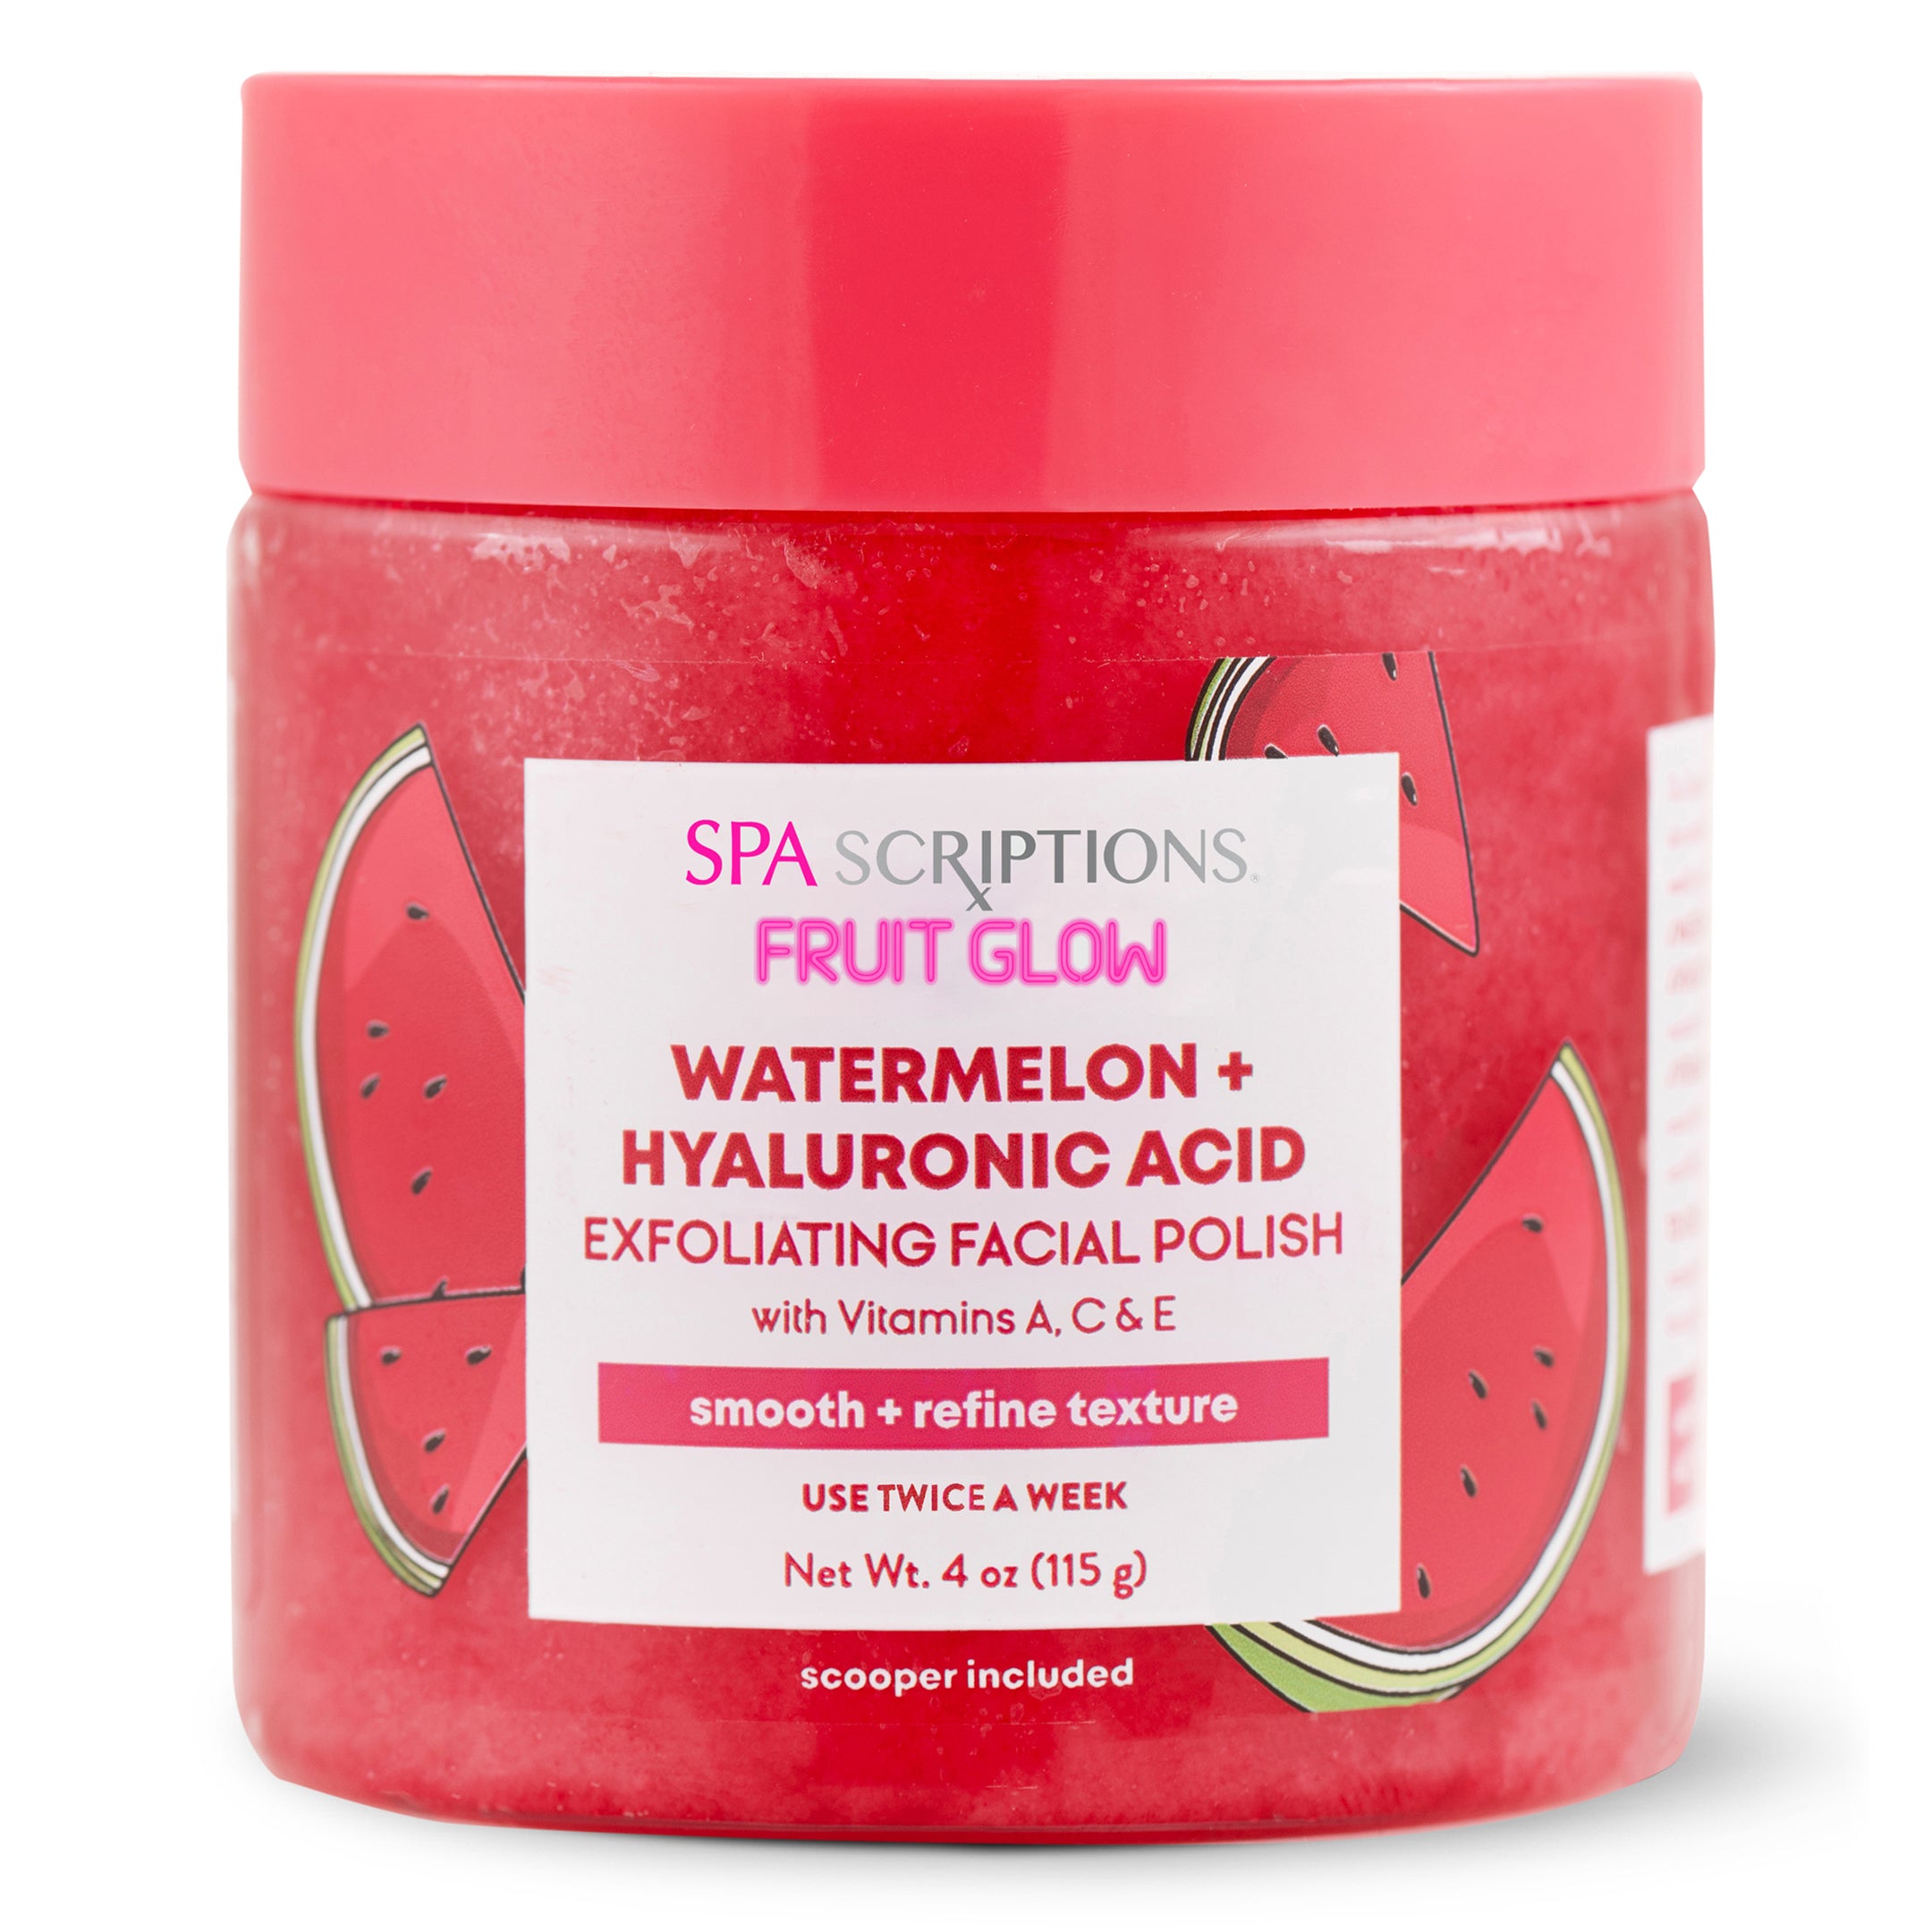 Fruit Glow Watermelon + Hyaluronic Acid Exfoliating Facial Polish